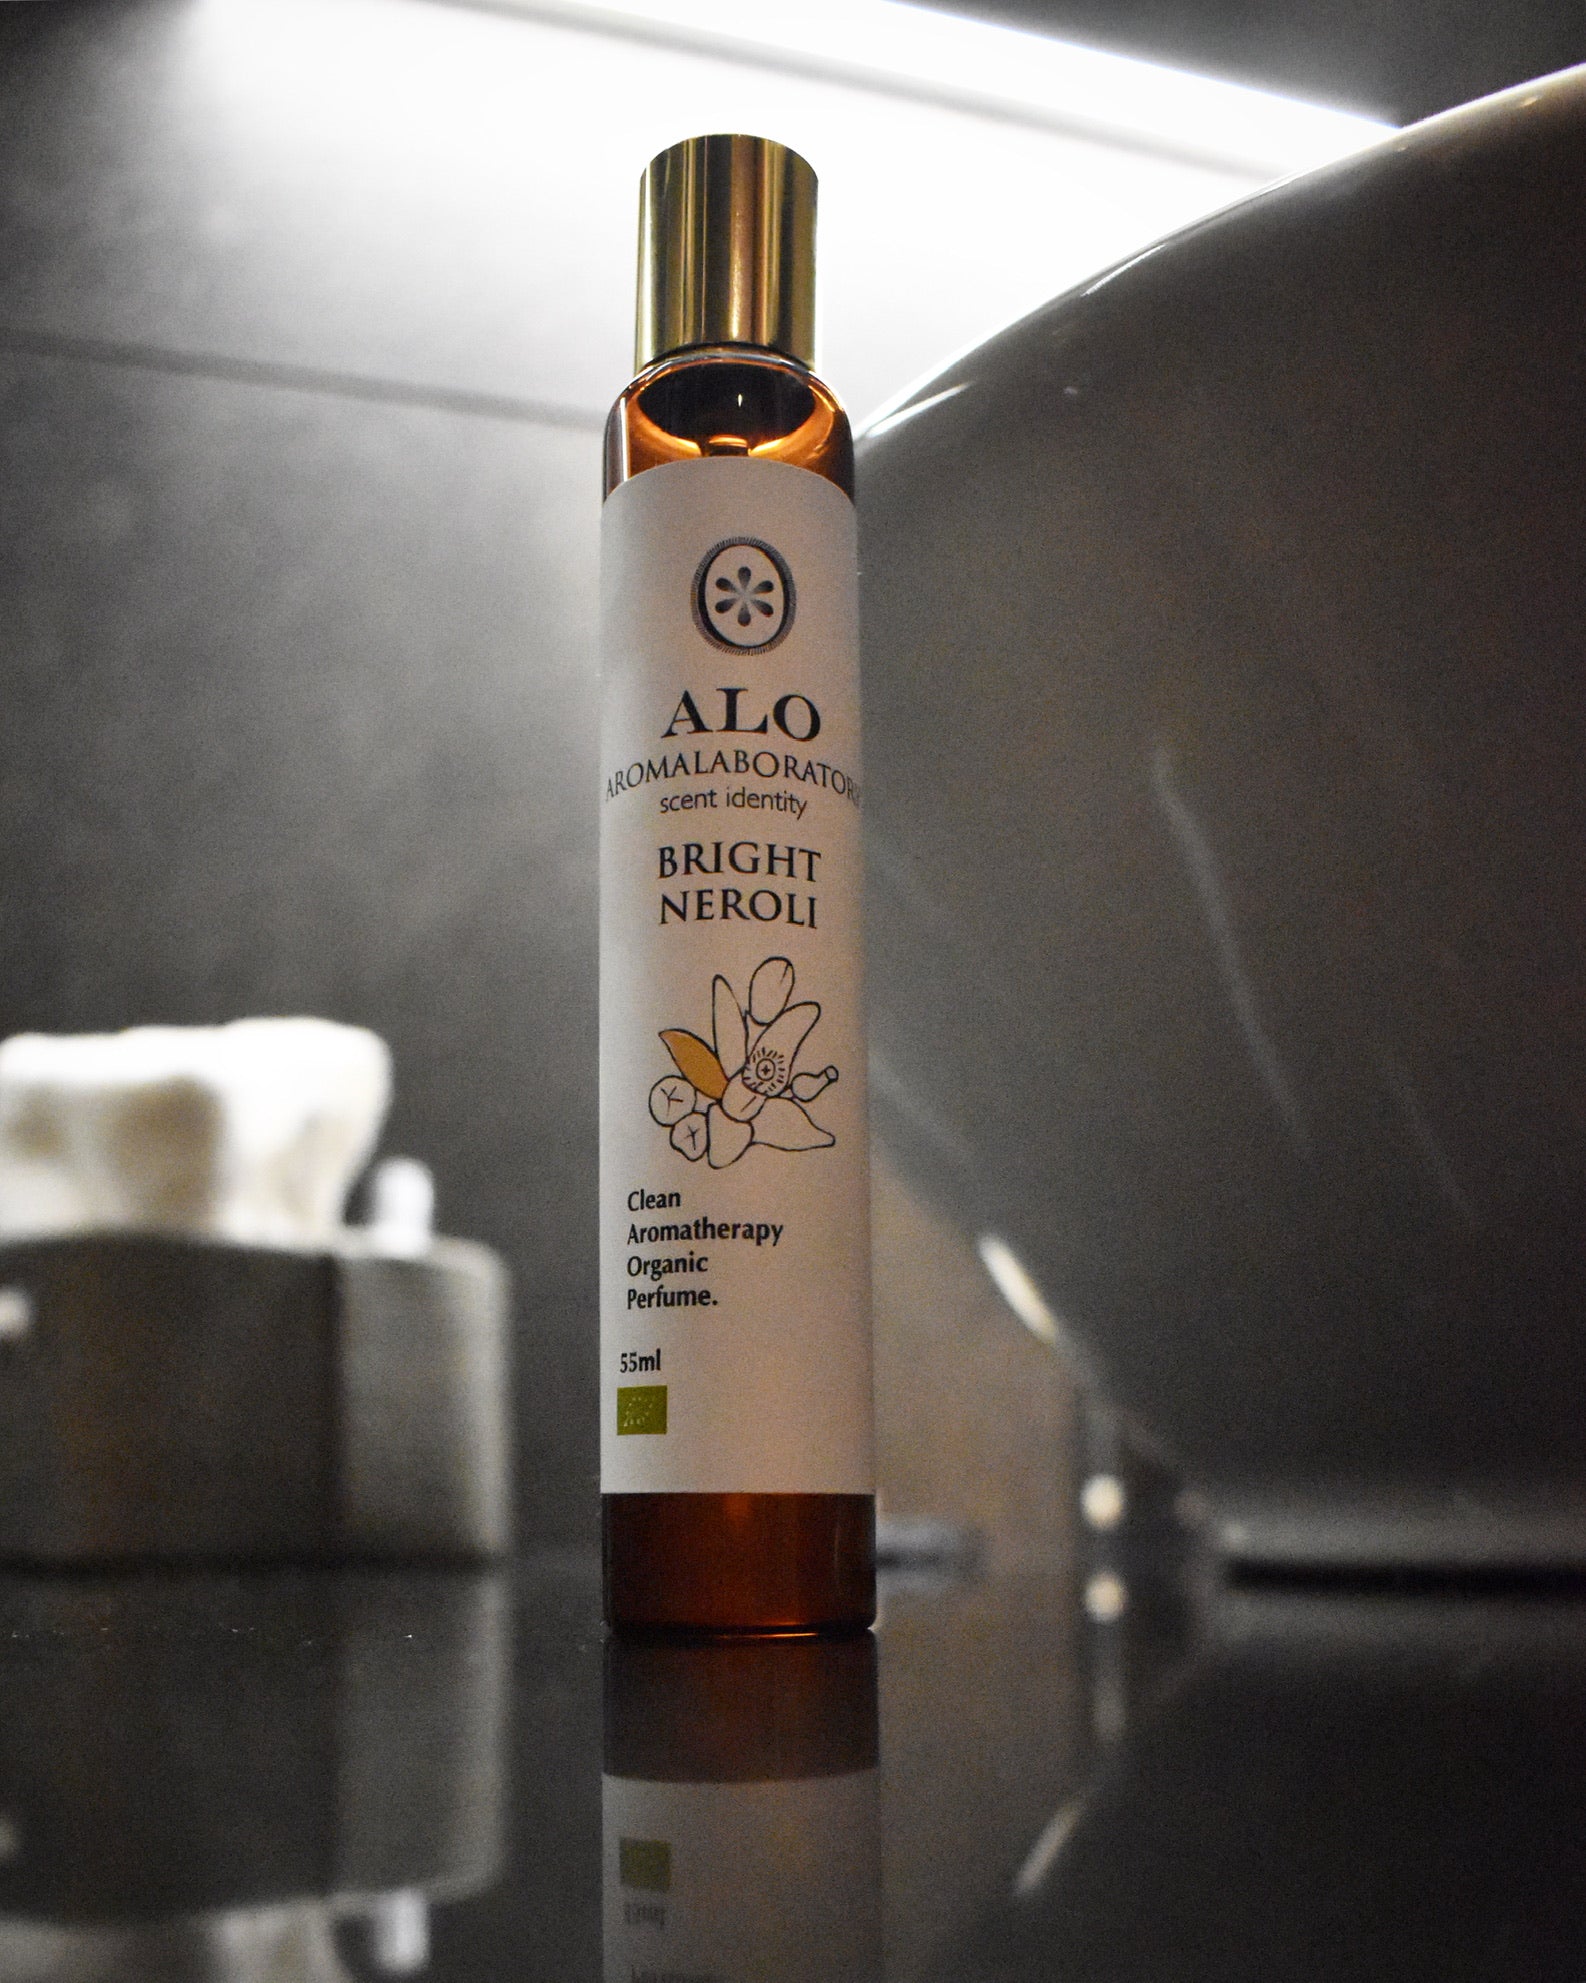 BRIGHT NEROLI. Aromatherapy Clean Perfume. Organic. 55ml.